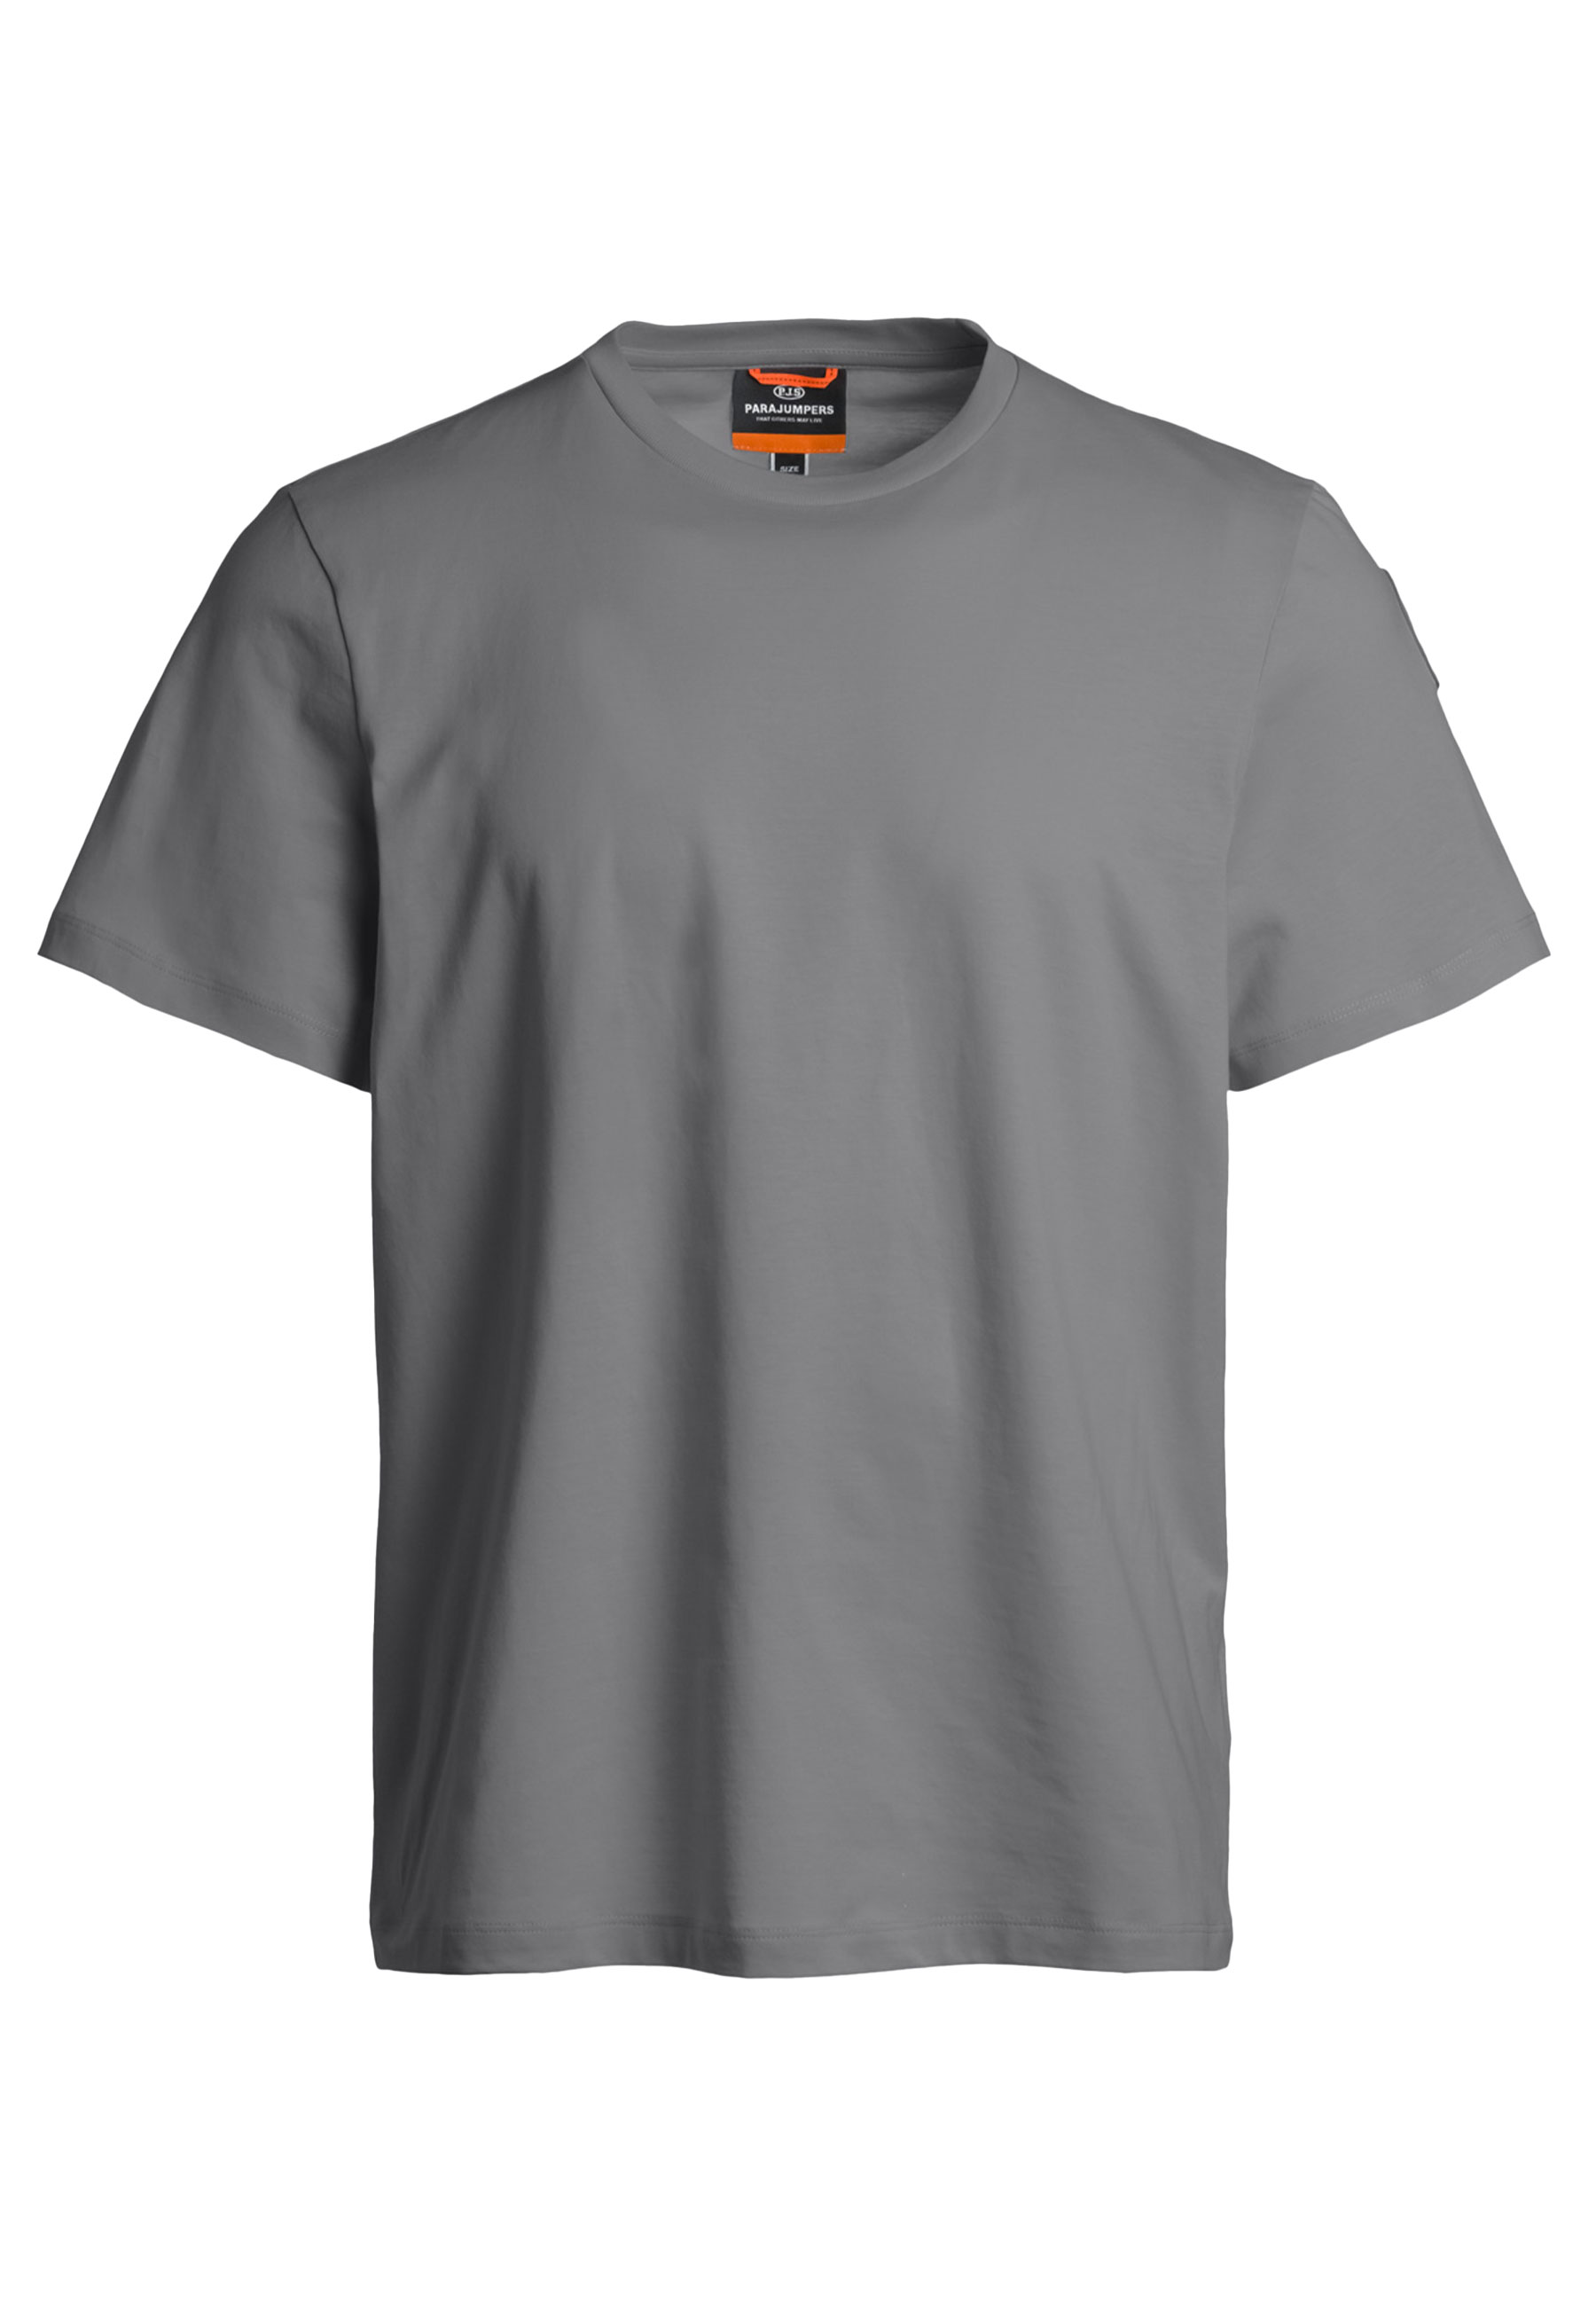 Shirt Donkergrijs Shispare tee t-shirts donkergrijs